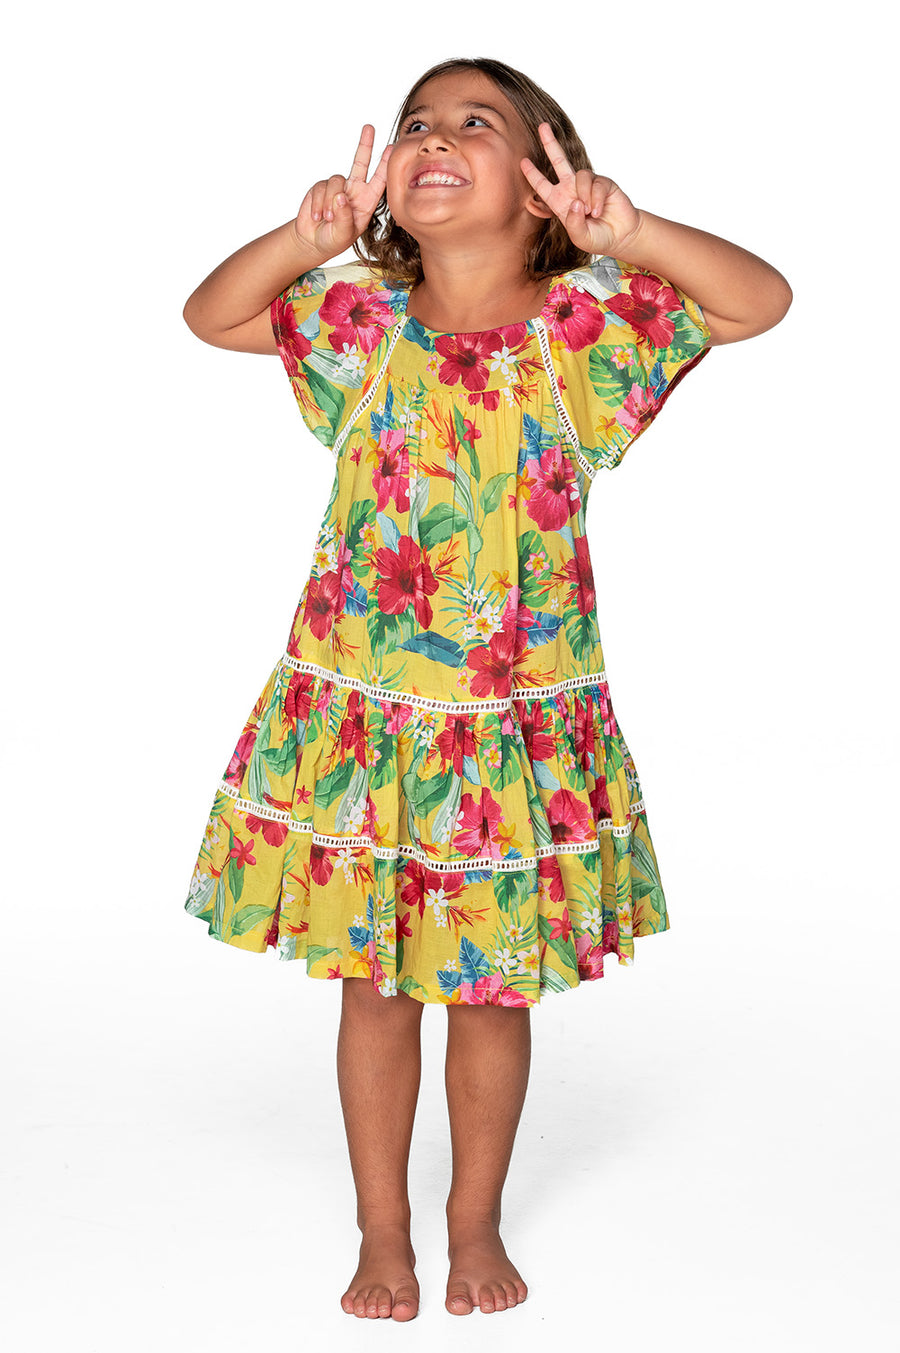 Tropicana Short Sleeve Dress (Lei)